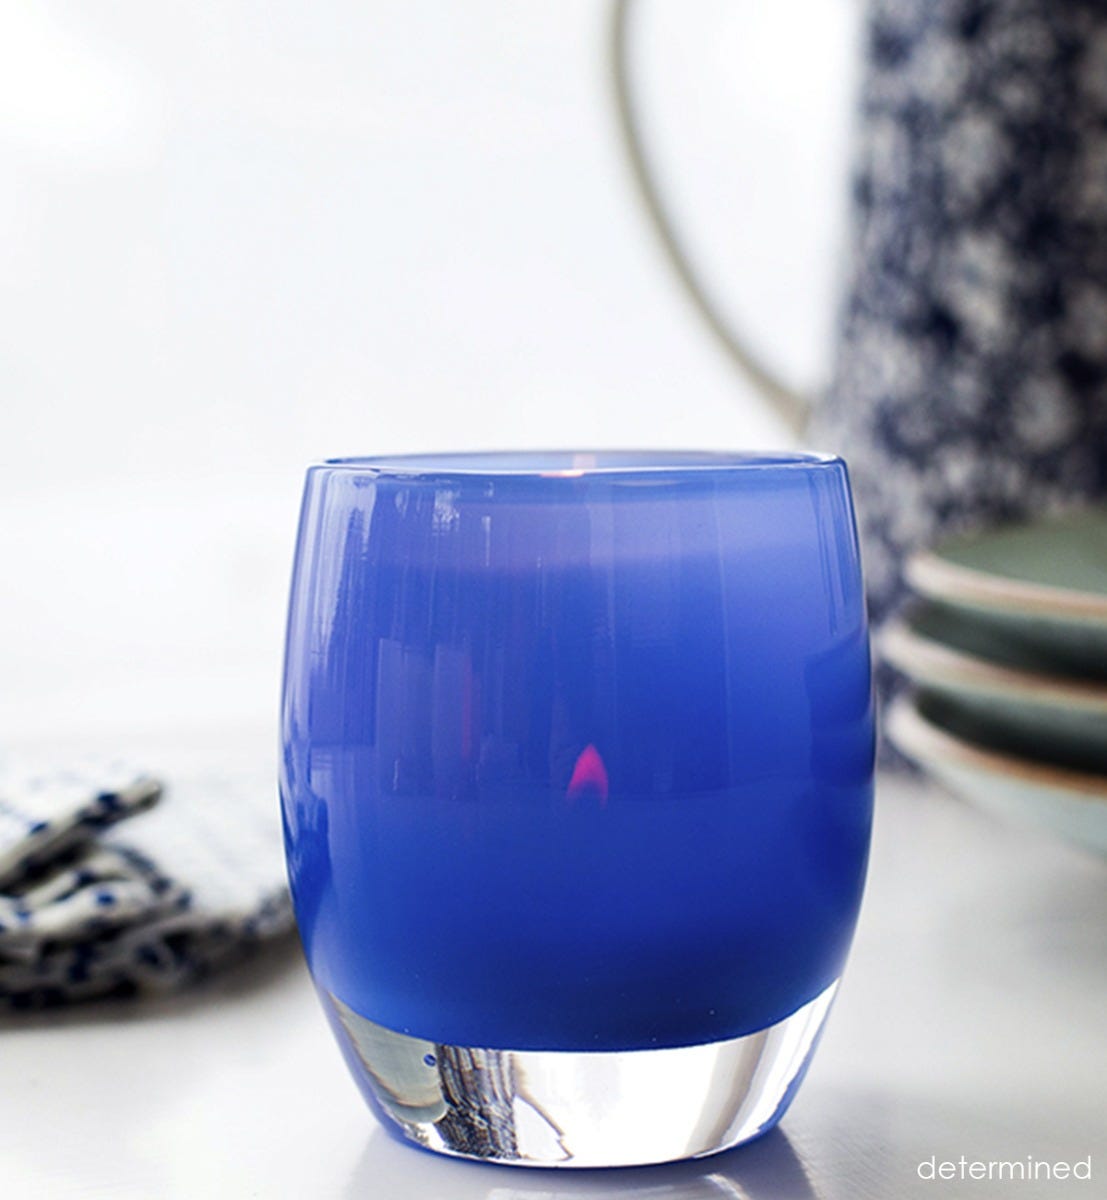 determined sapphire blue hand-blown glass votive candle holder.